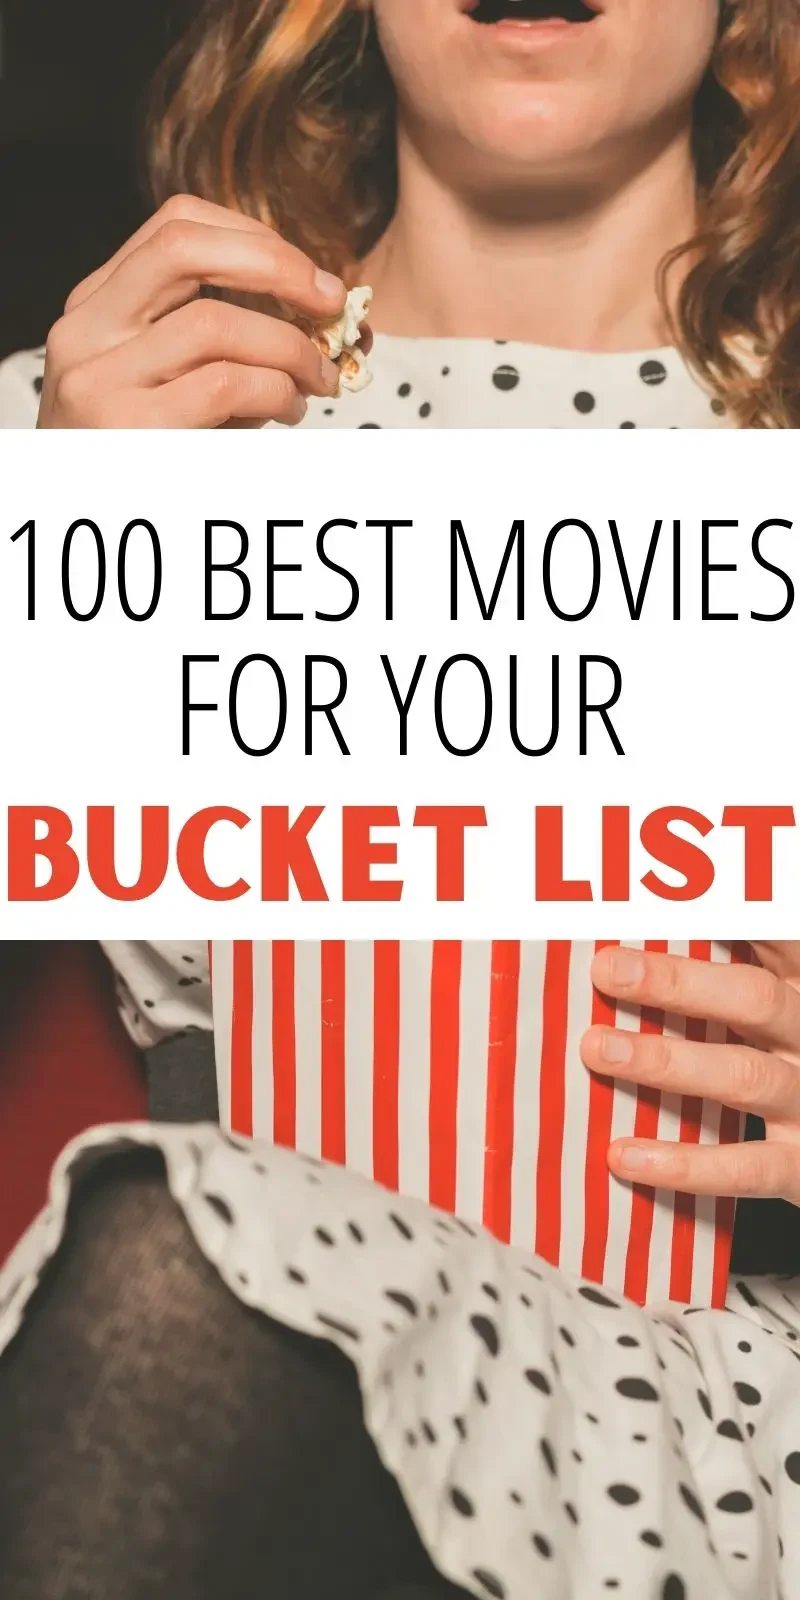 100 Movie bucket list